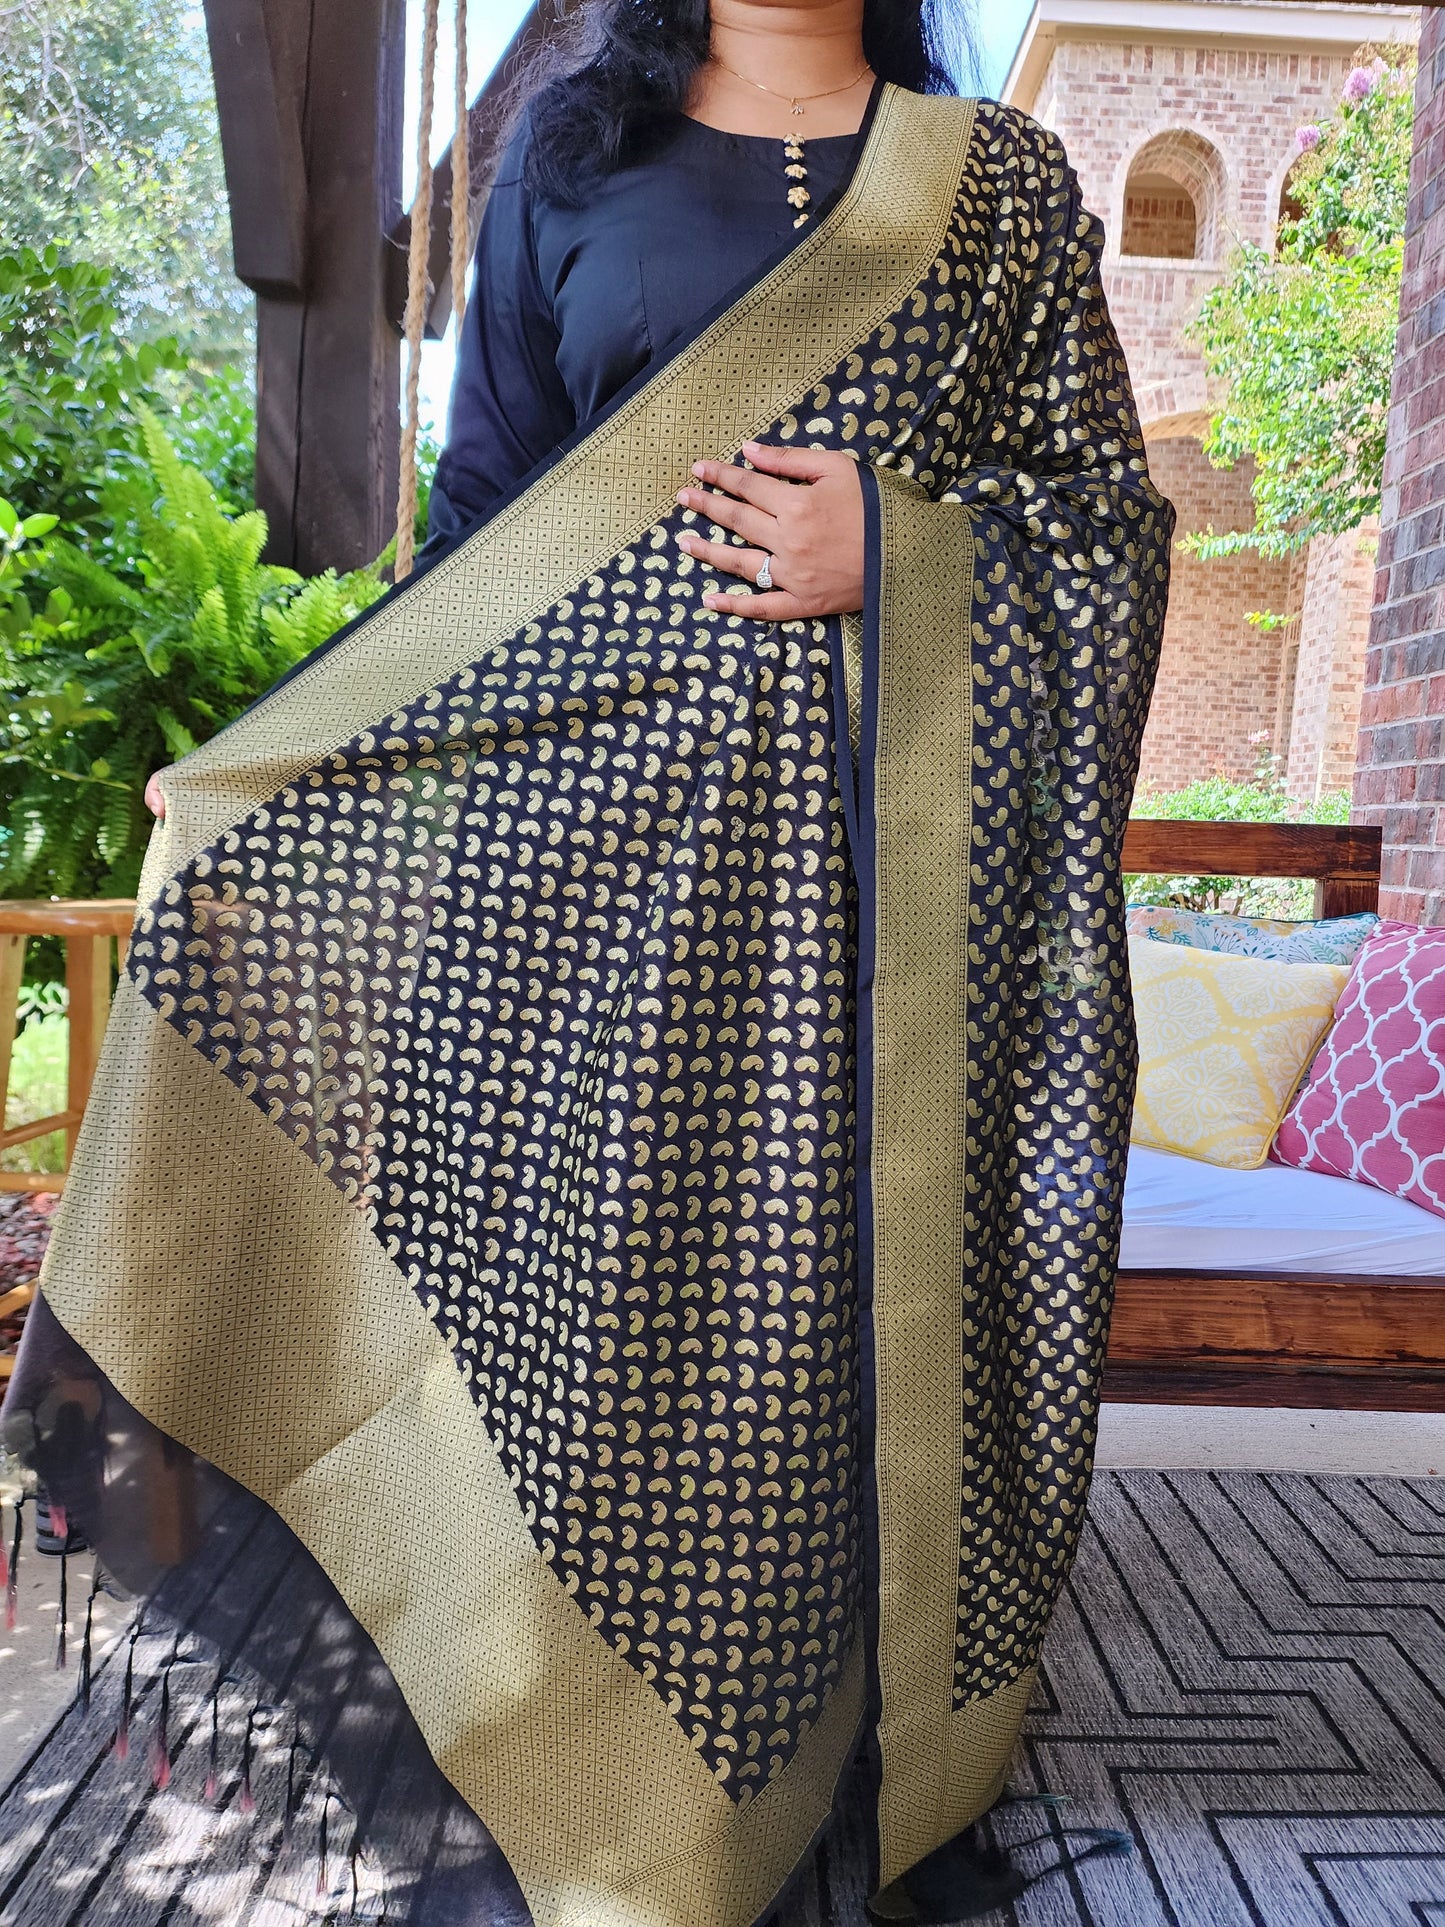 Indian A Line Style Kurta / Kurti, Black and Gold Color Elegant Long Suit Dress, Leggings & Banarasi Dupatta set, Silky Smooth Designer Suit